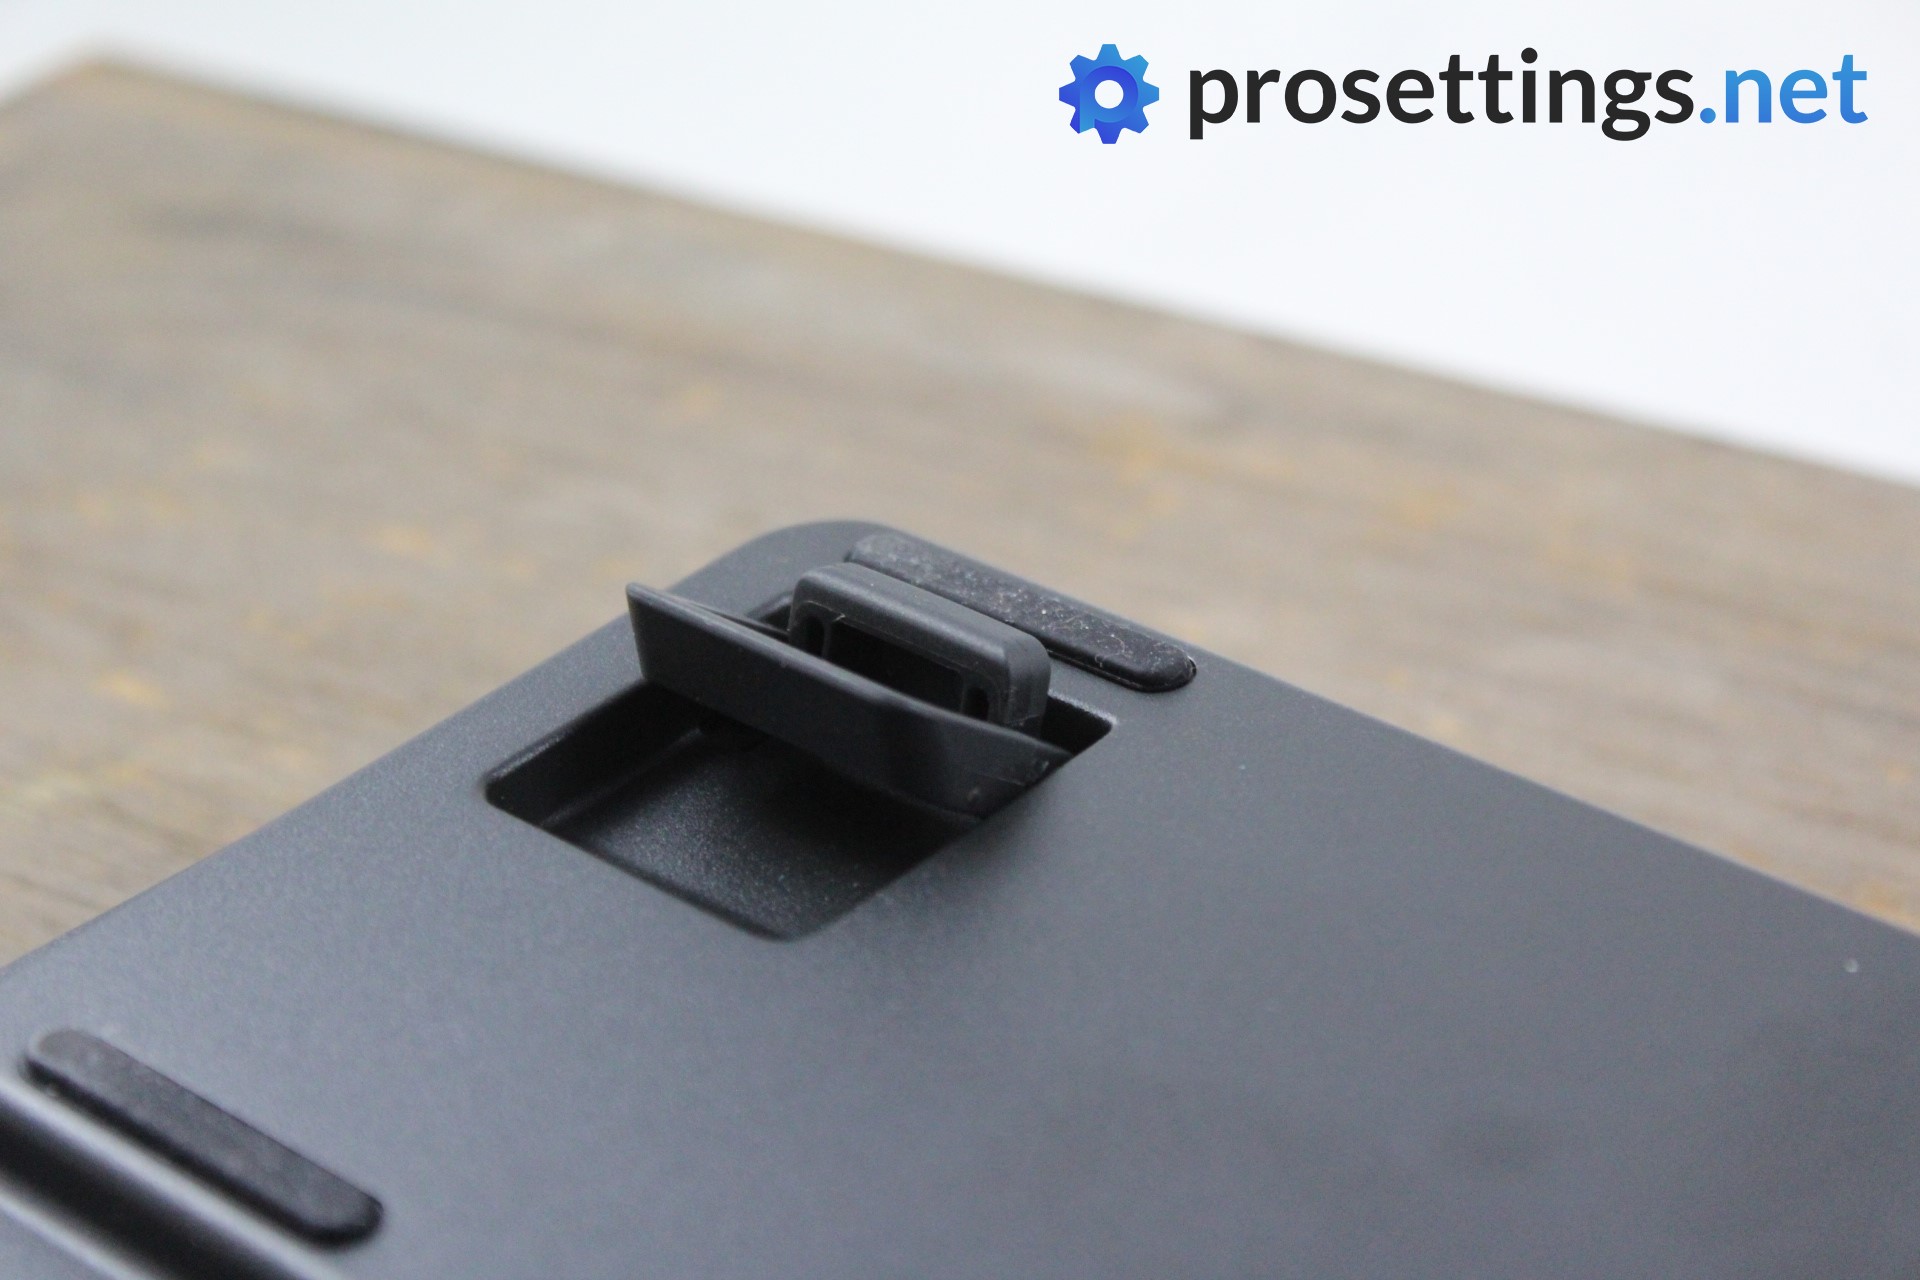 SteelSeries Apex Pro Mini Review